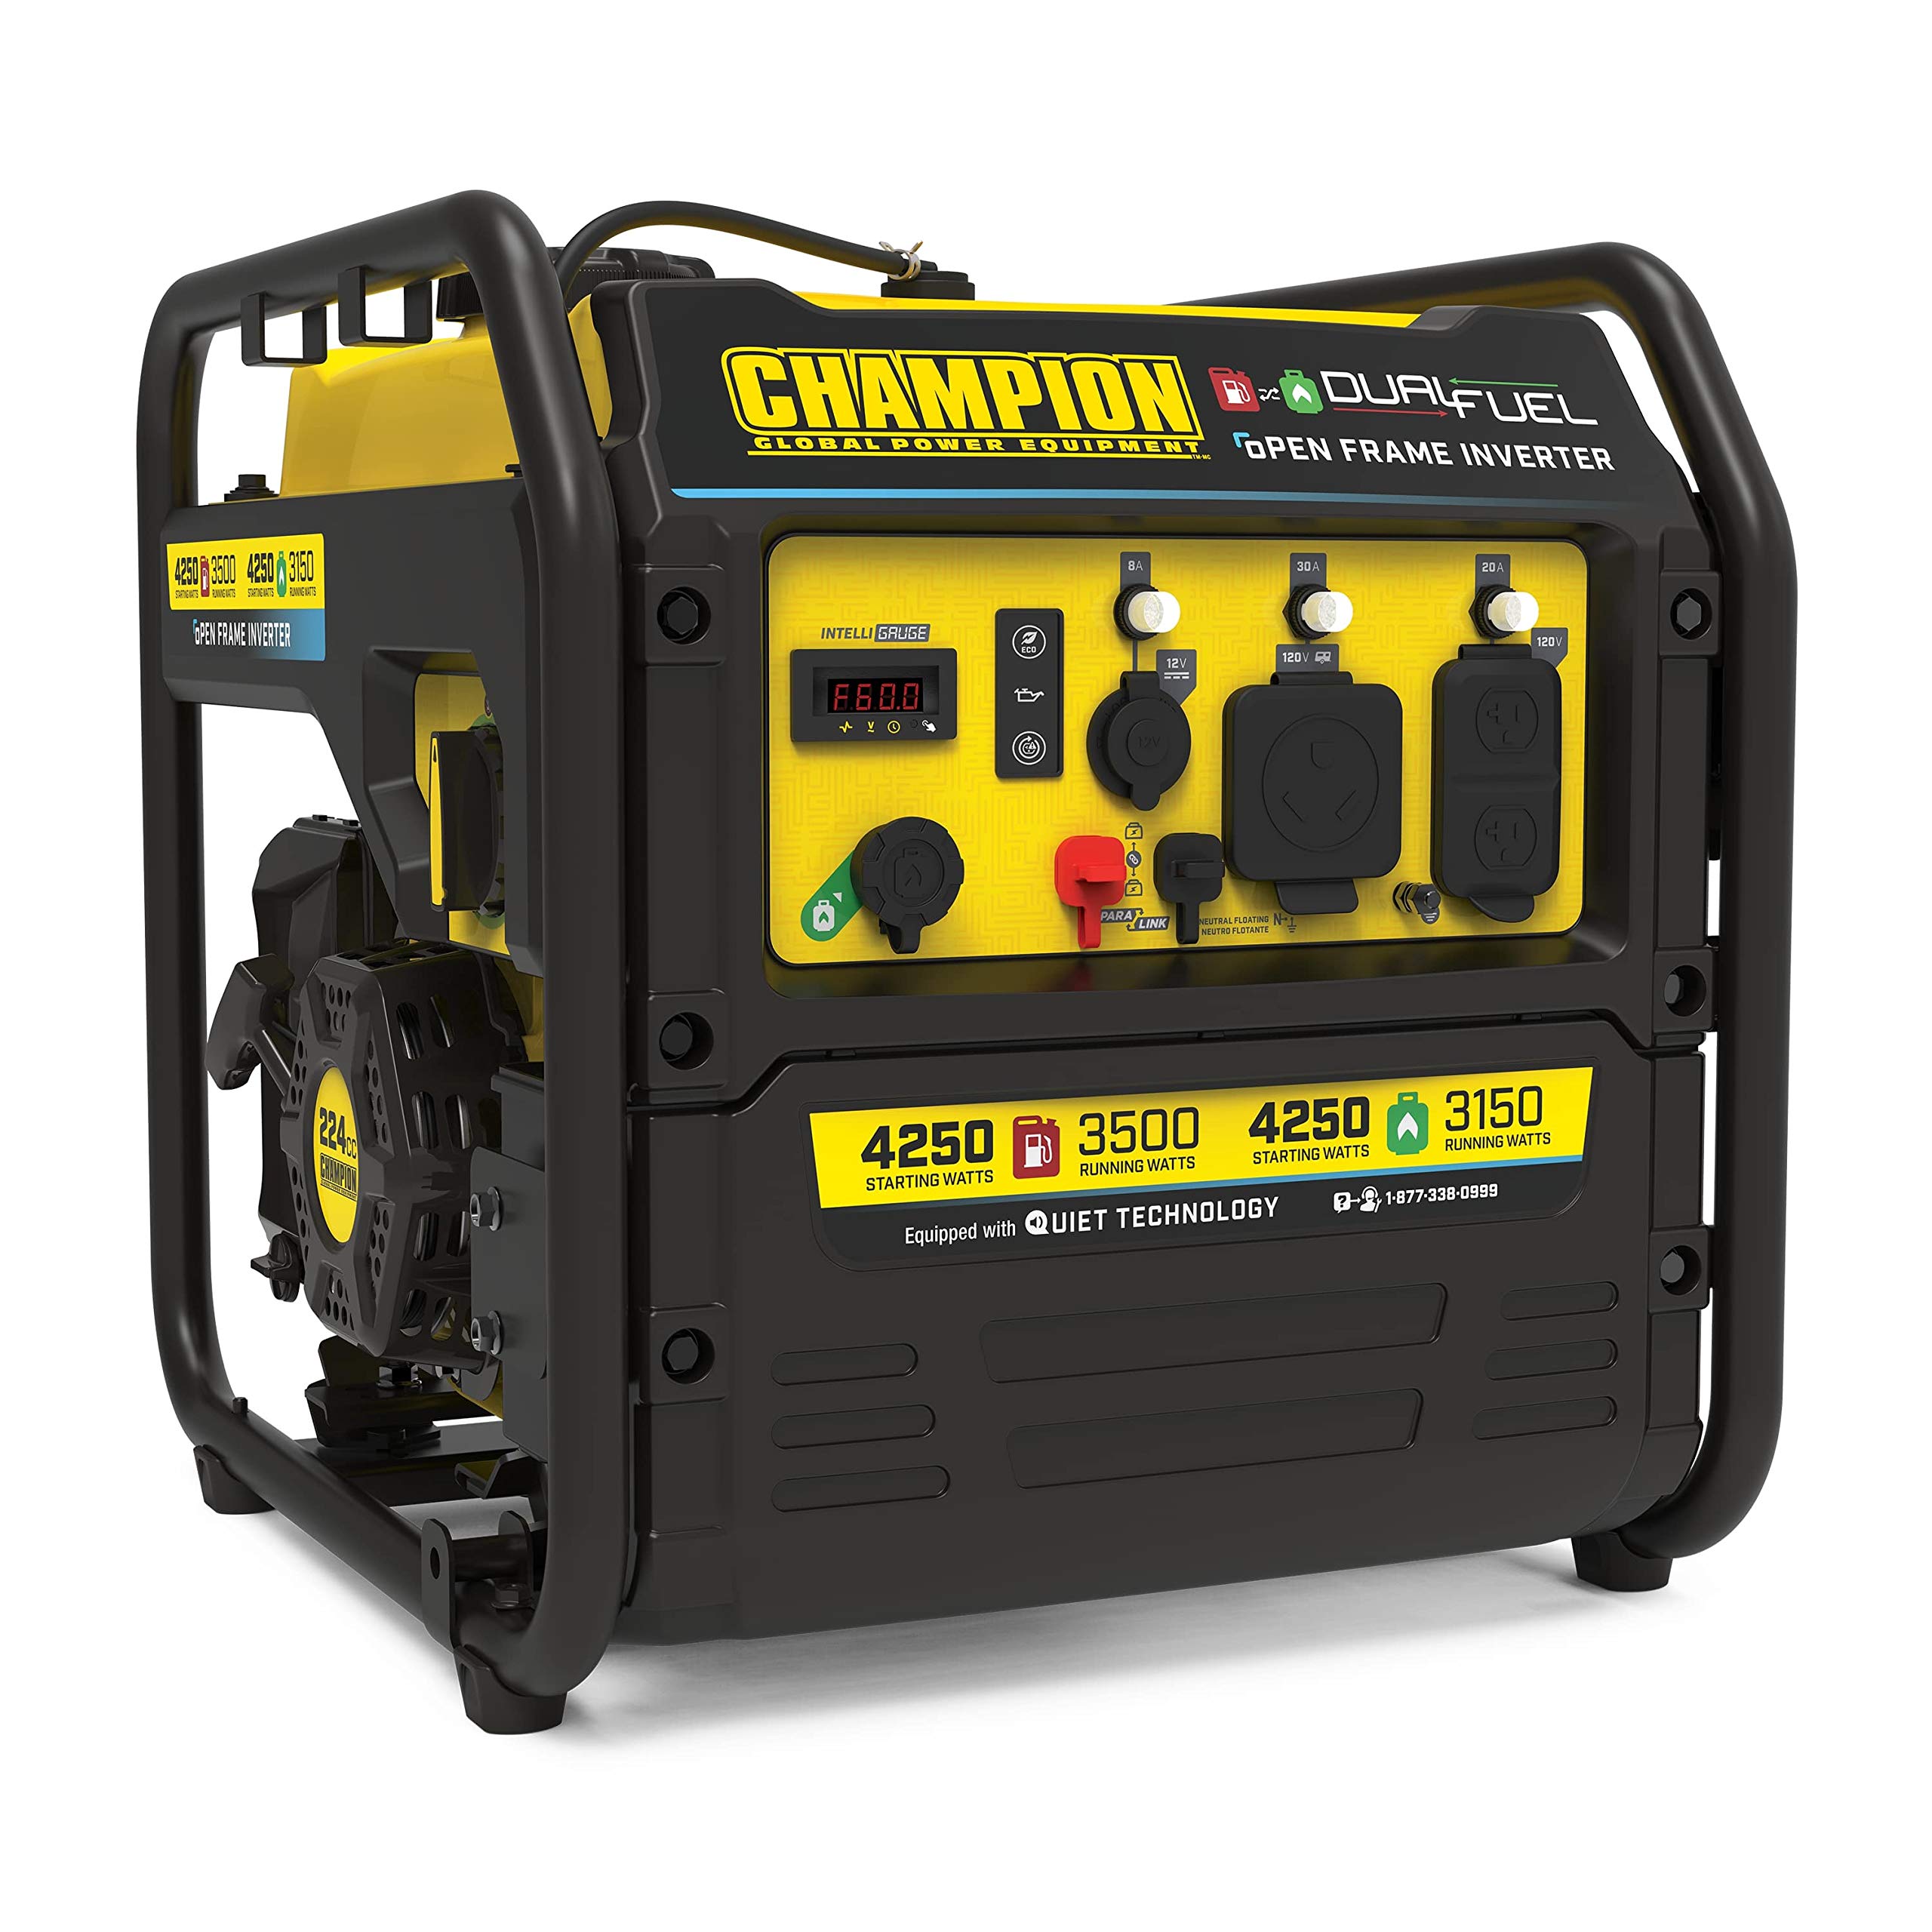 Champion Dual Fuel Power Equipment 200914 4250-Watt Open Frame Inverter Generator, Dual Fuel Technology  - Amazon.com - $499.58 Free Prime shipping (UPDATED 7/28:  NOW $451.33)